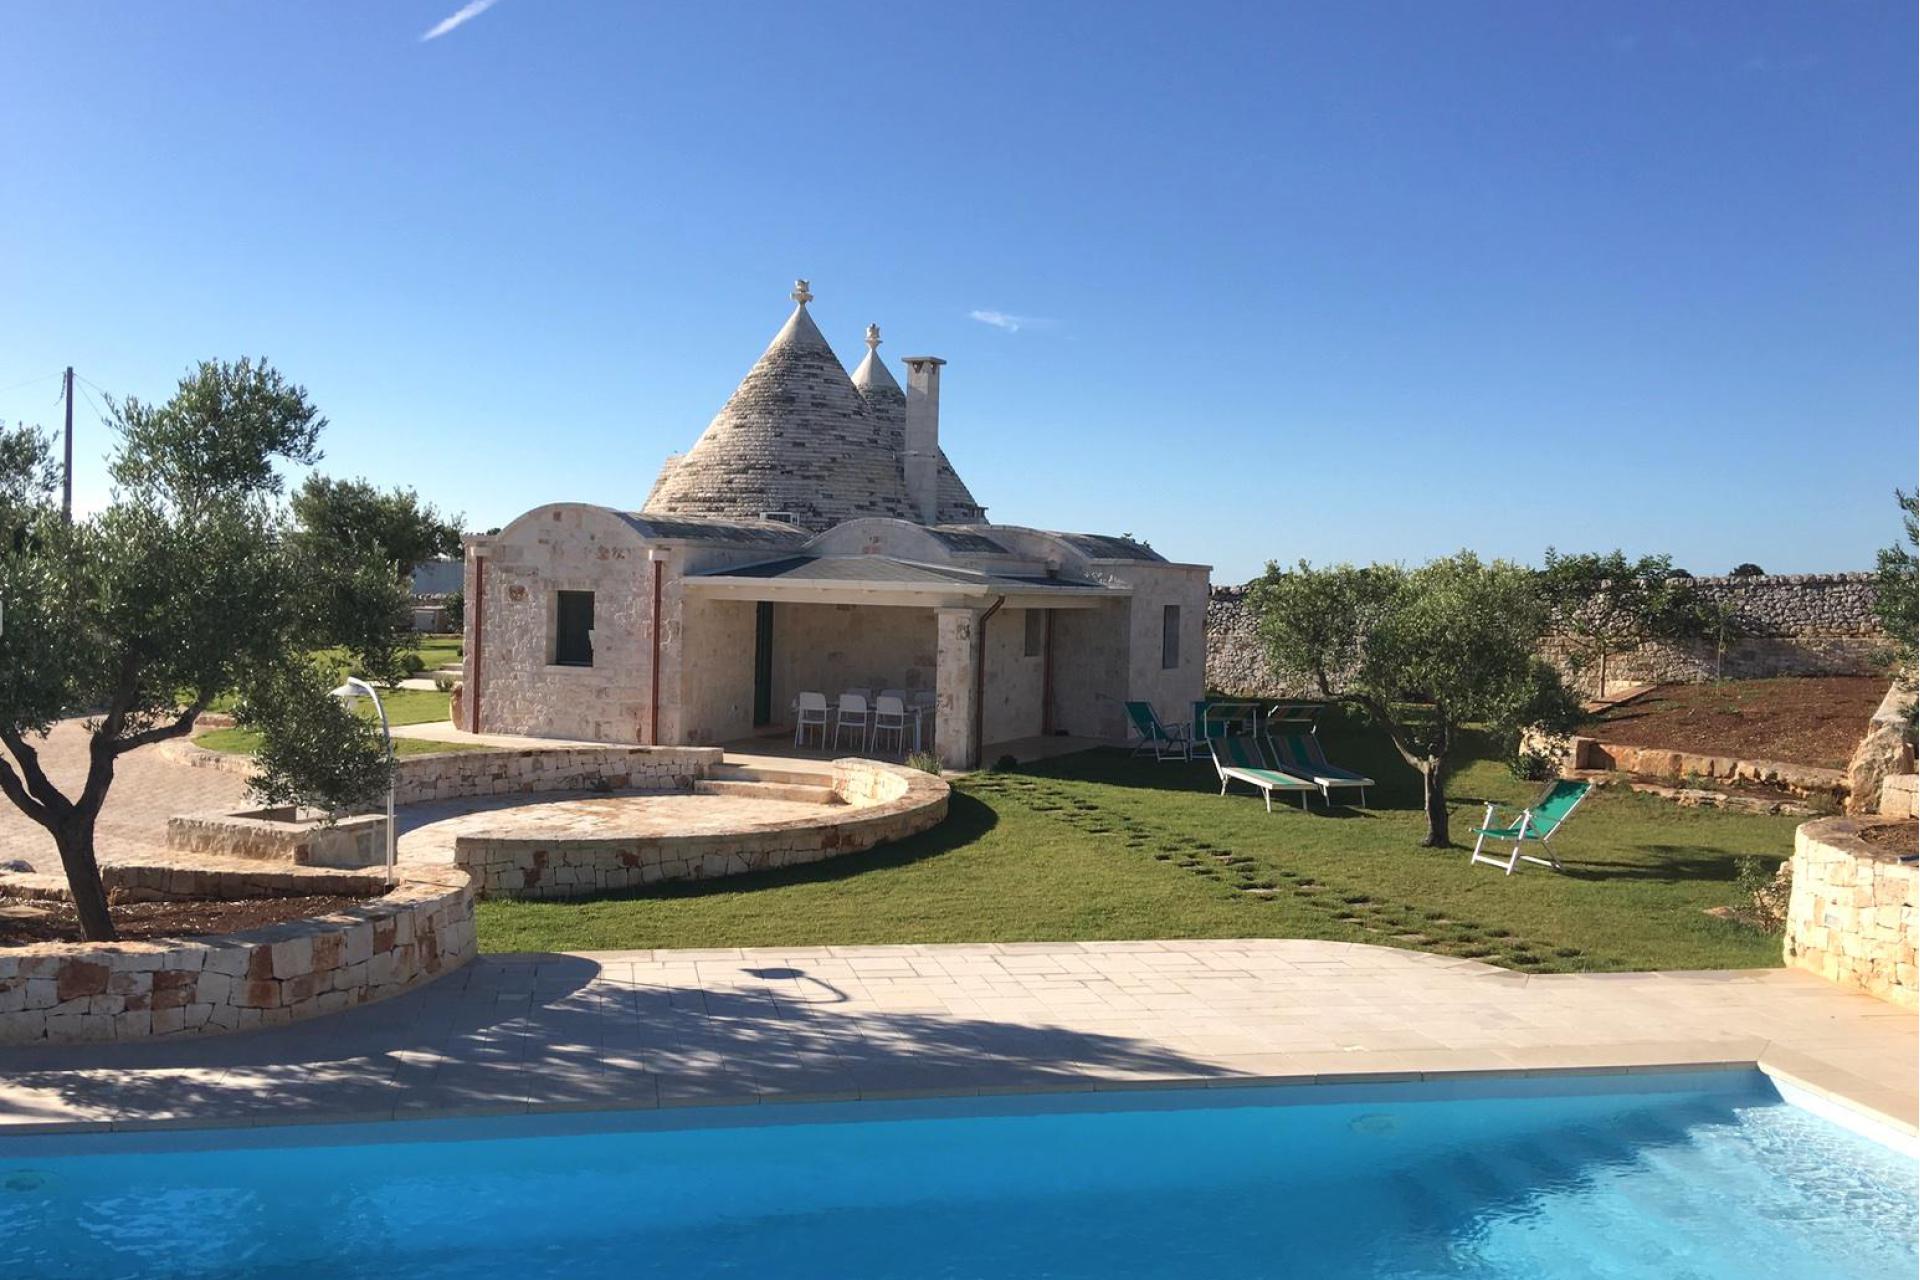 Agriturismo Puglia Private trullo with pool in olive orchard